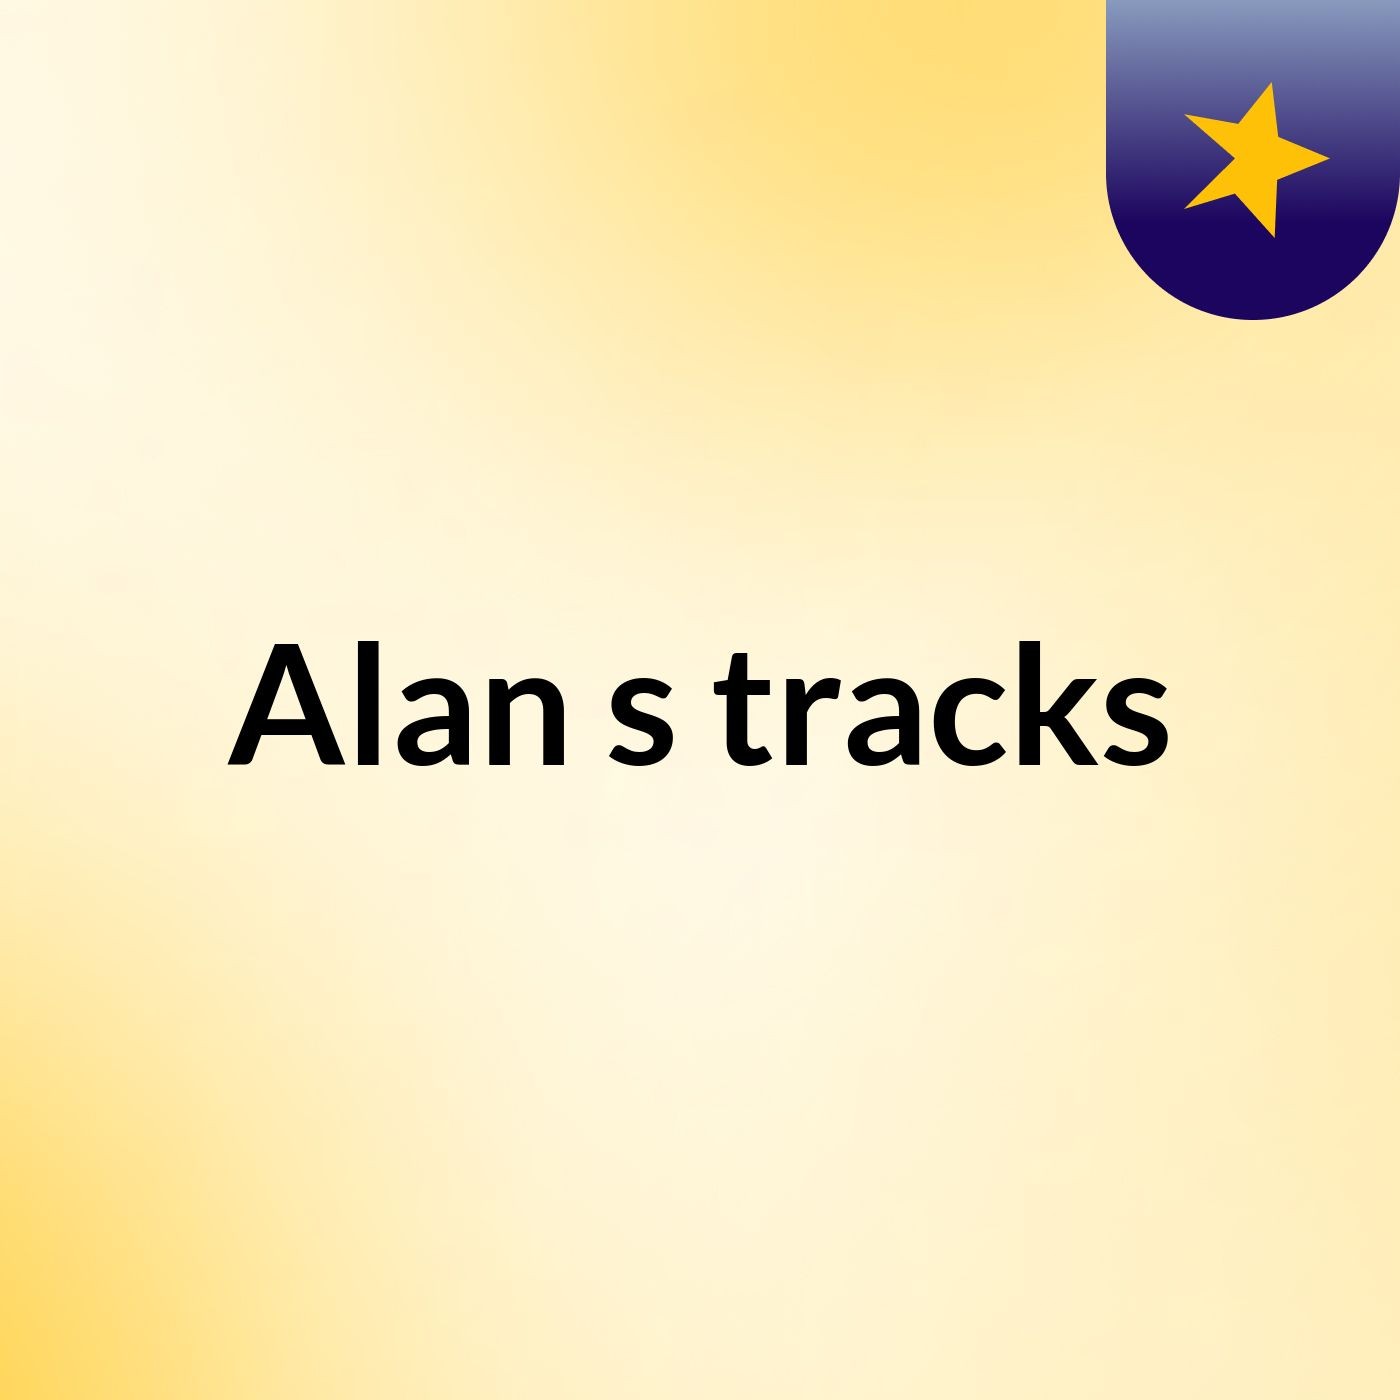 Alan's tracks